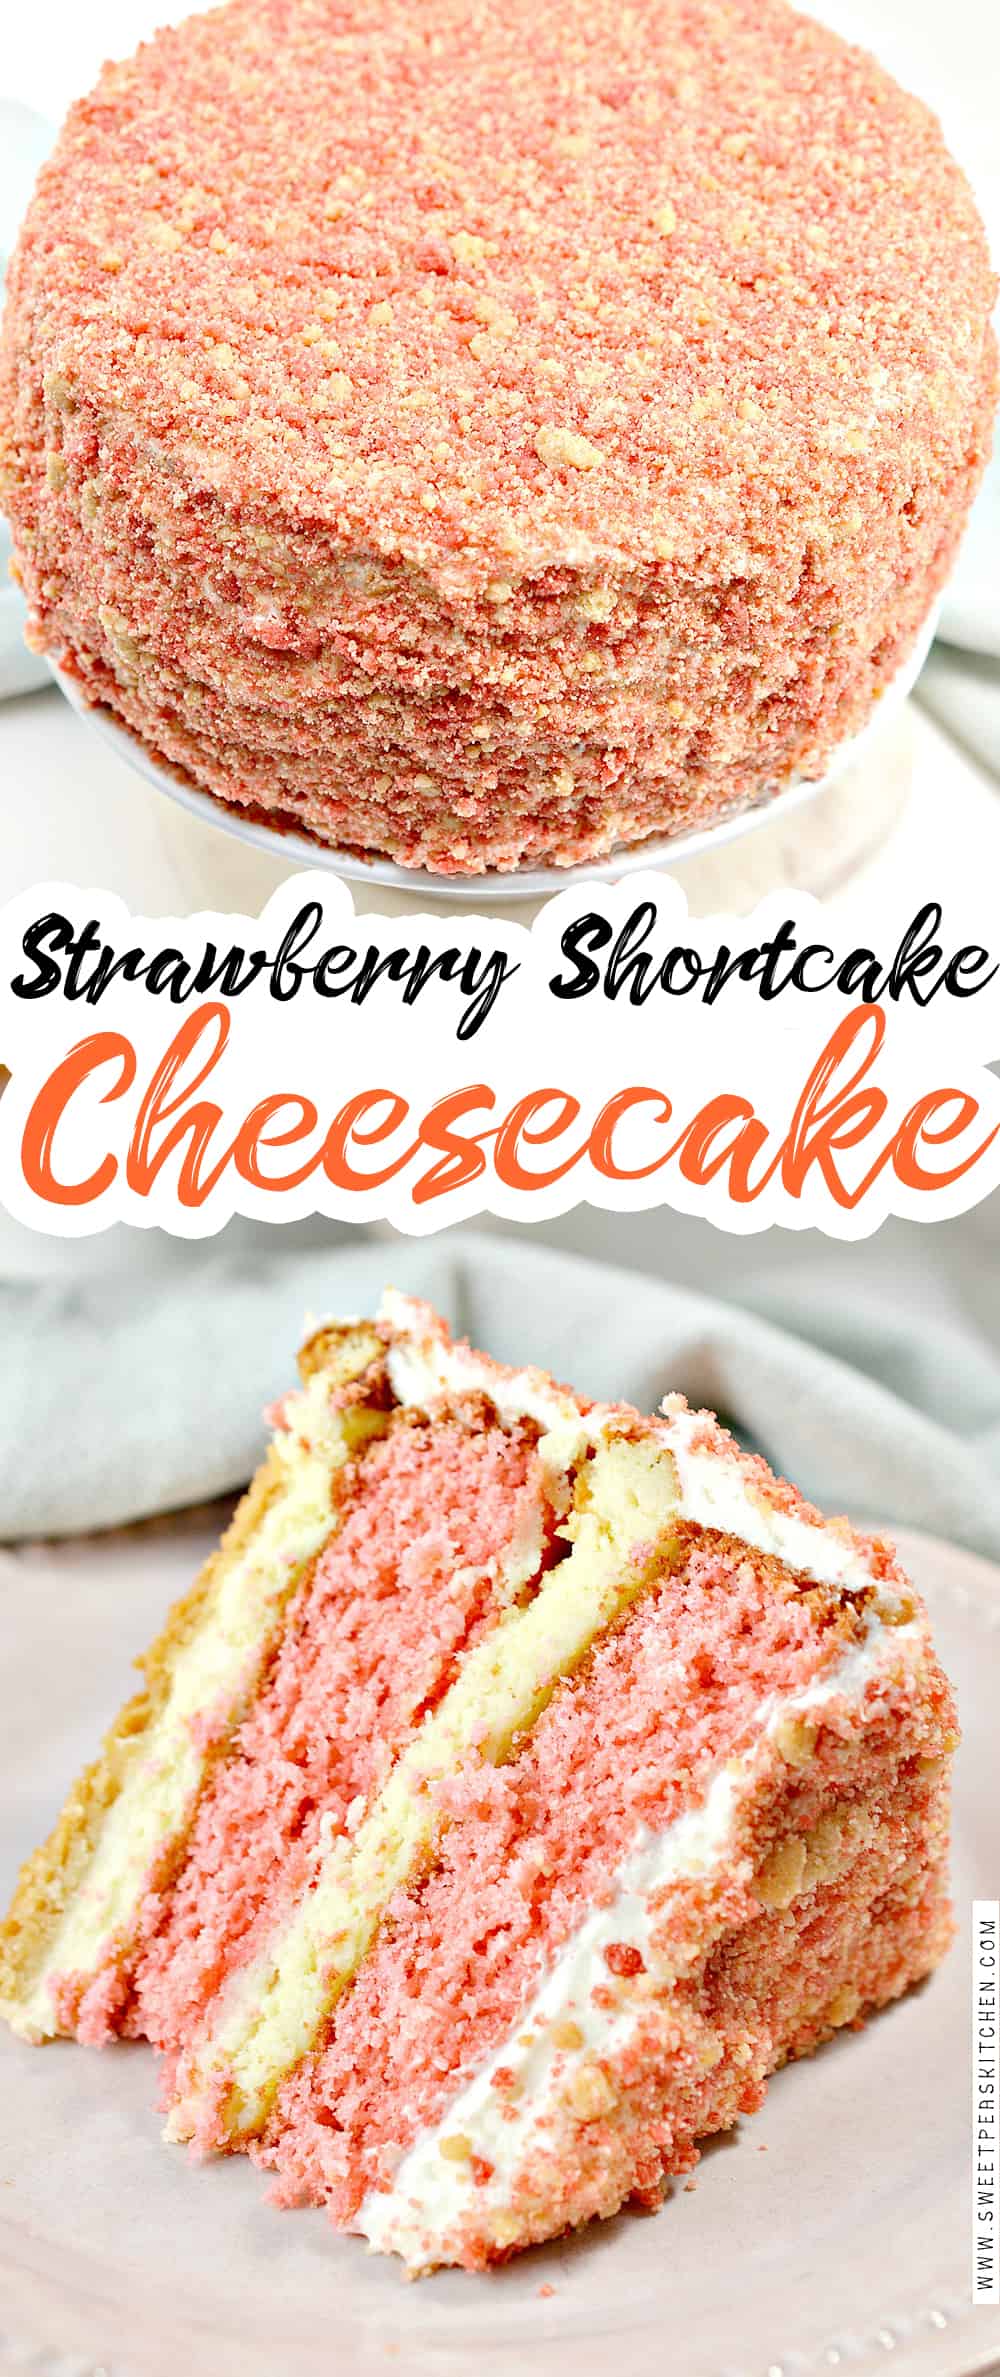 Strawberry Shortcake Cheesecake on pinterest